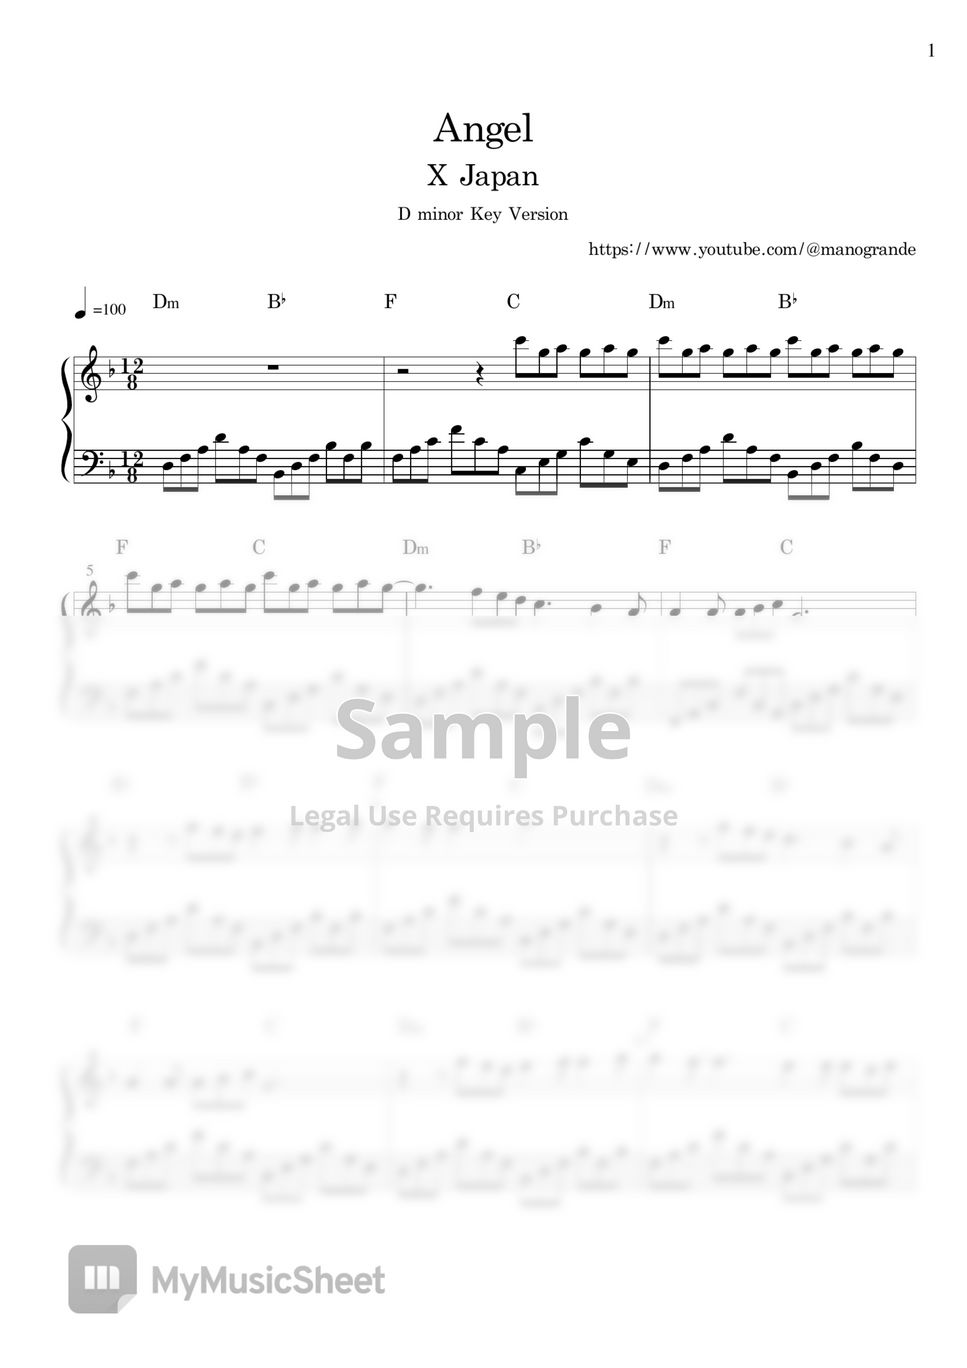 X Japan - Angel D minor (easy key) by manogrande